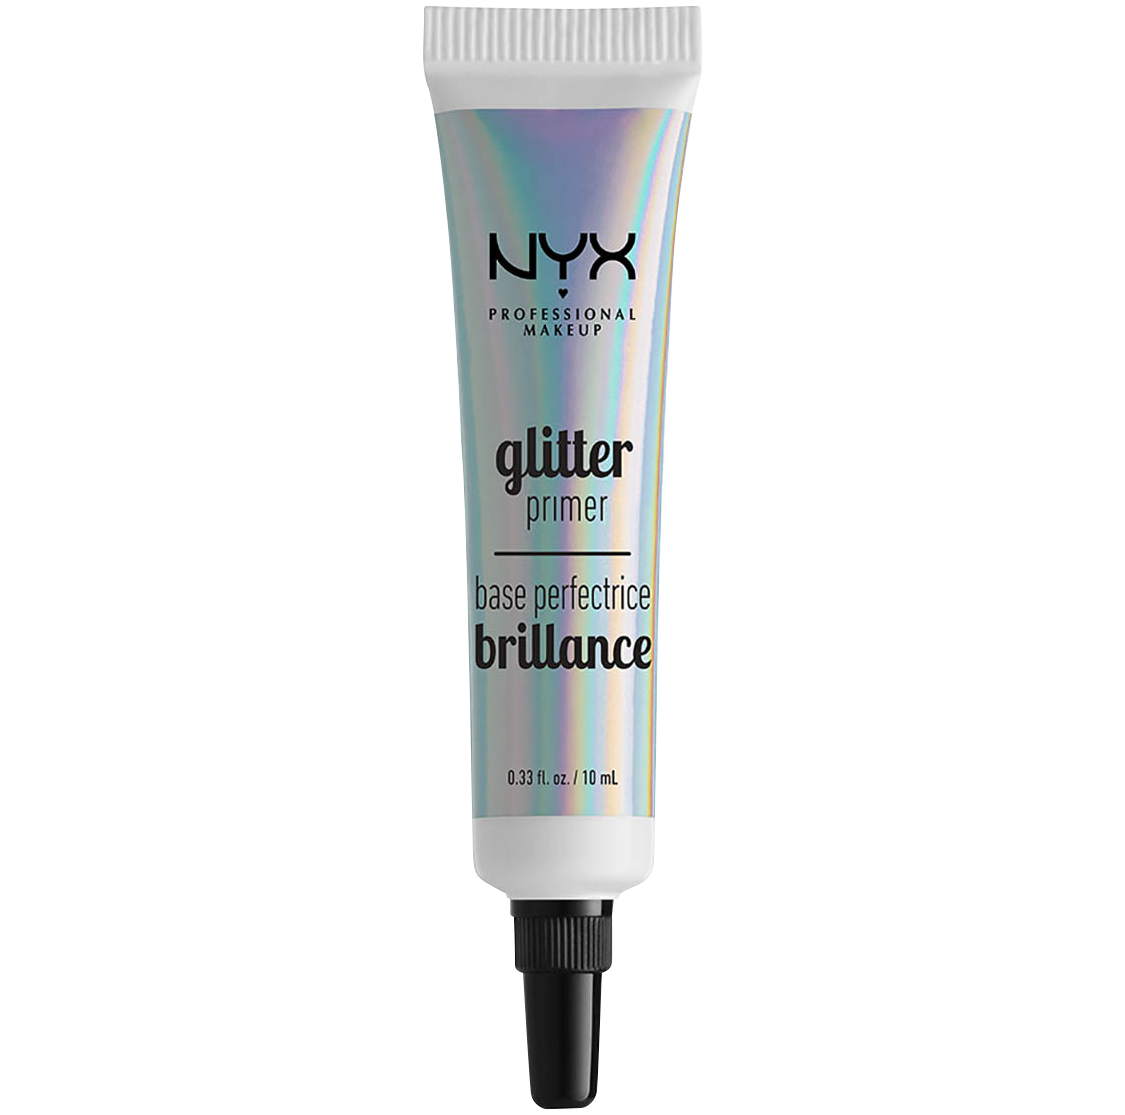 NYX Professional Makeup Glitter Primer праймер с блестками, 10 мл